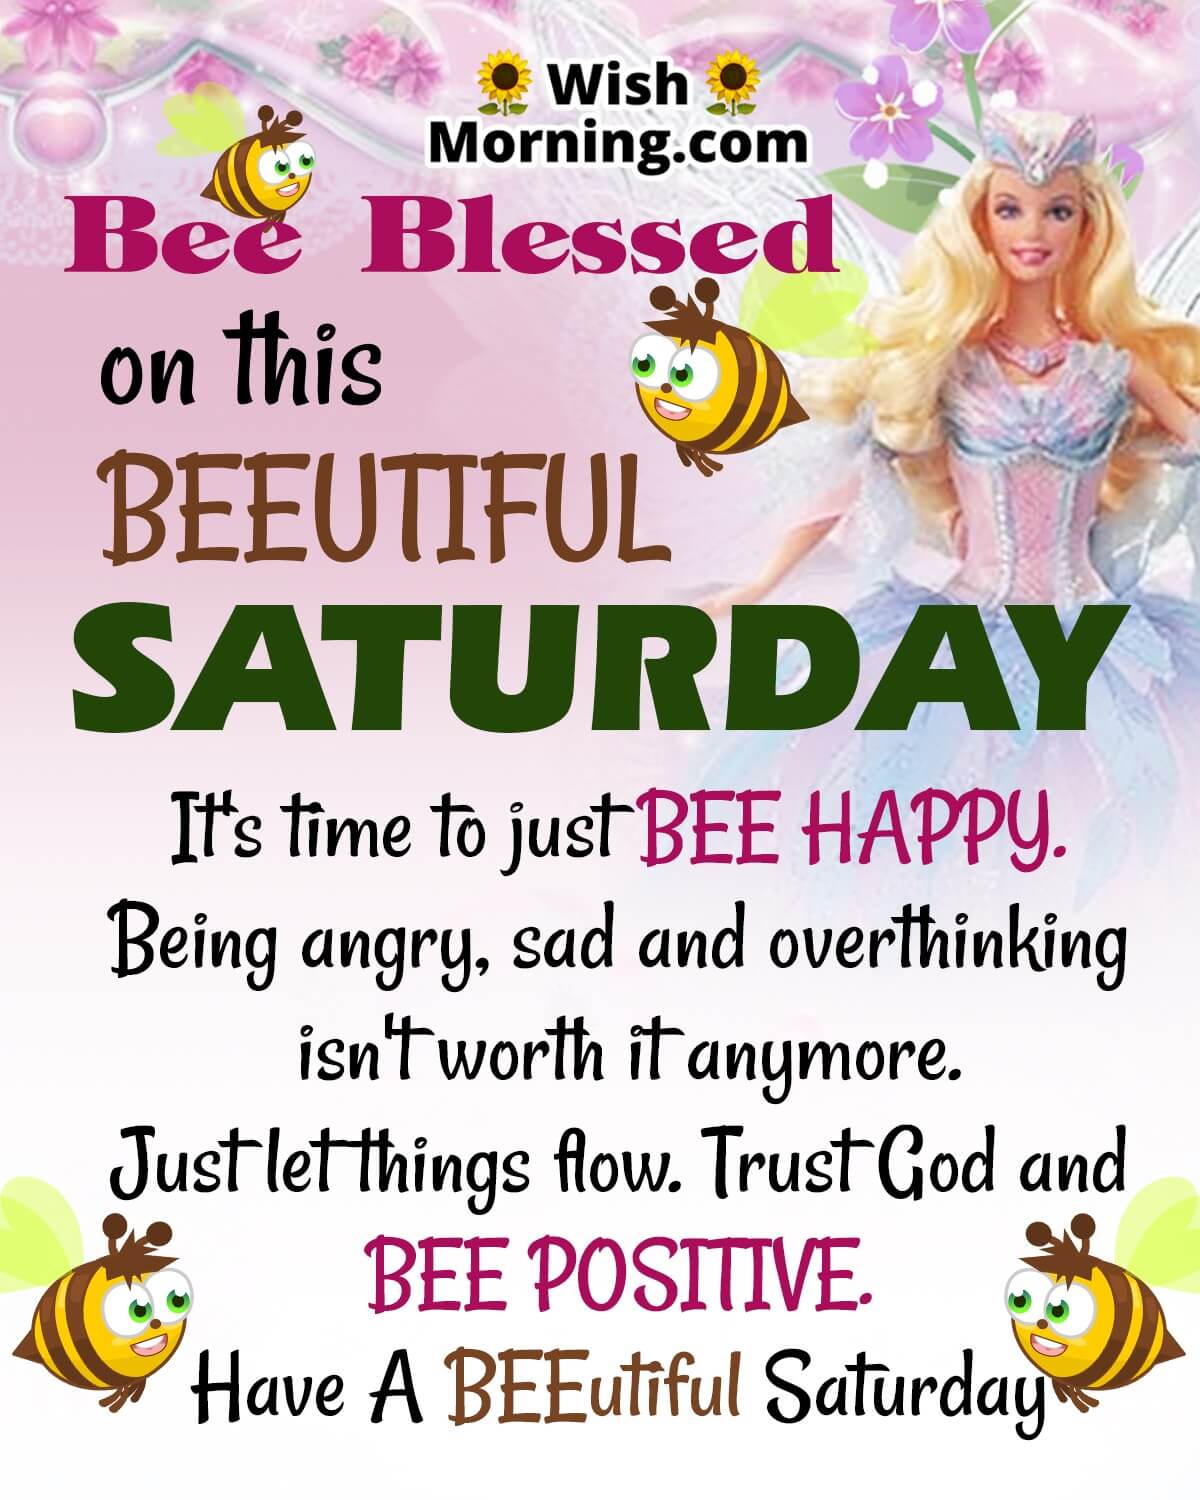 Have A Beeutiful Saturday